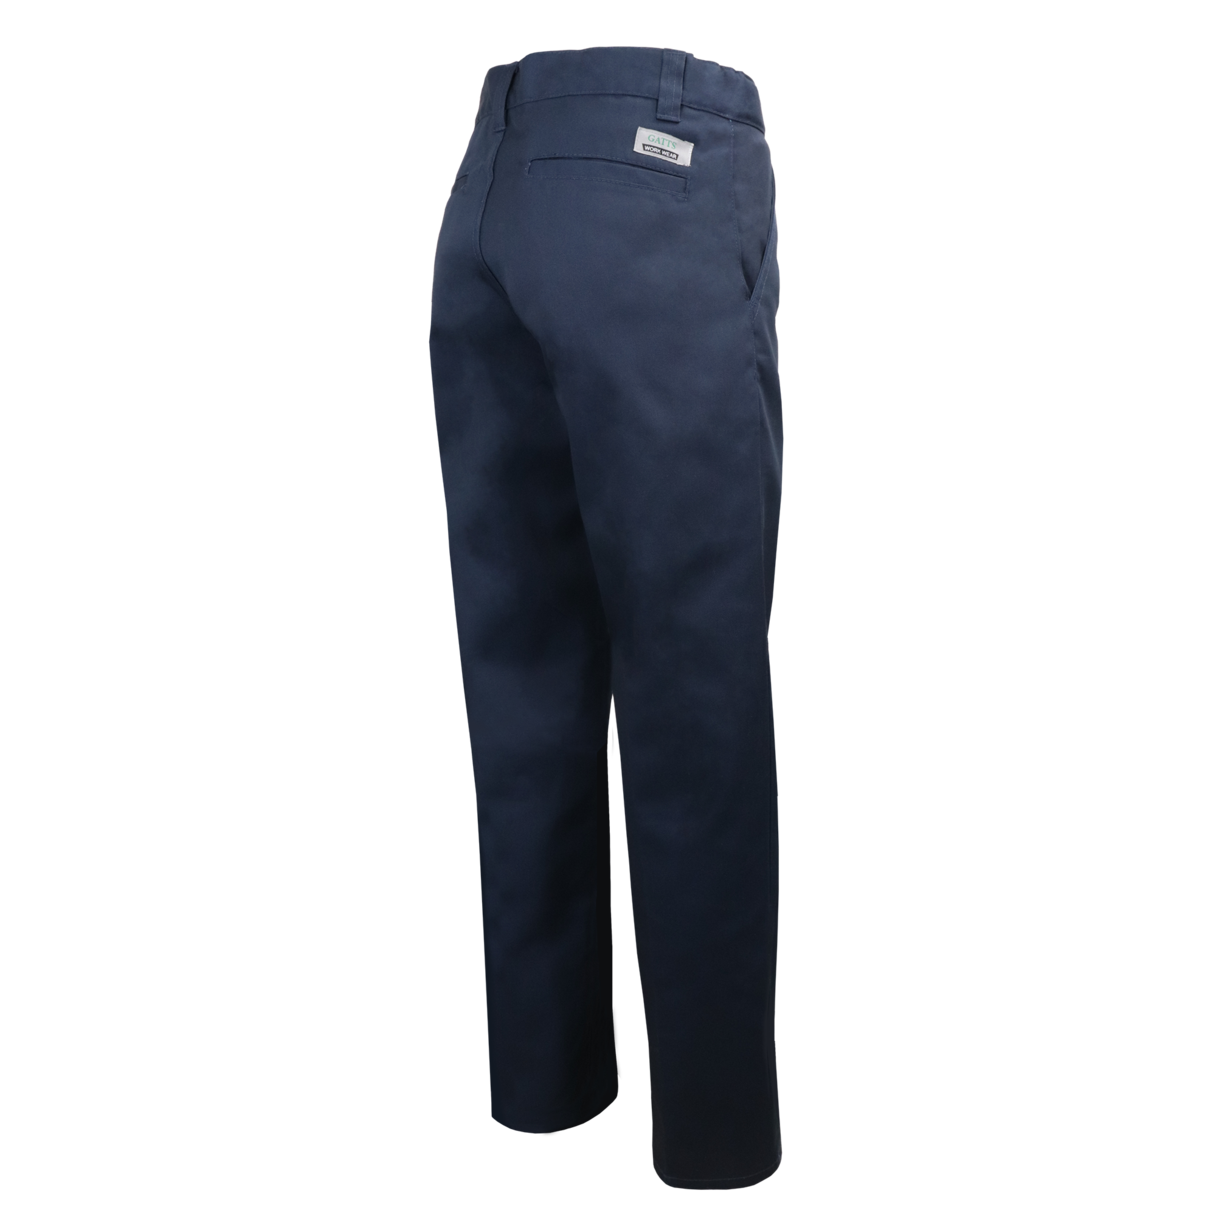 Pantalon de travail taille flexible Gatts #MRB-777-N dos marine